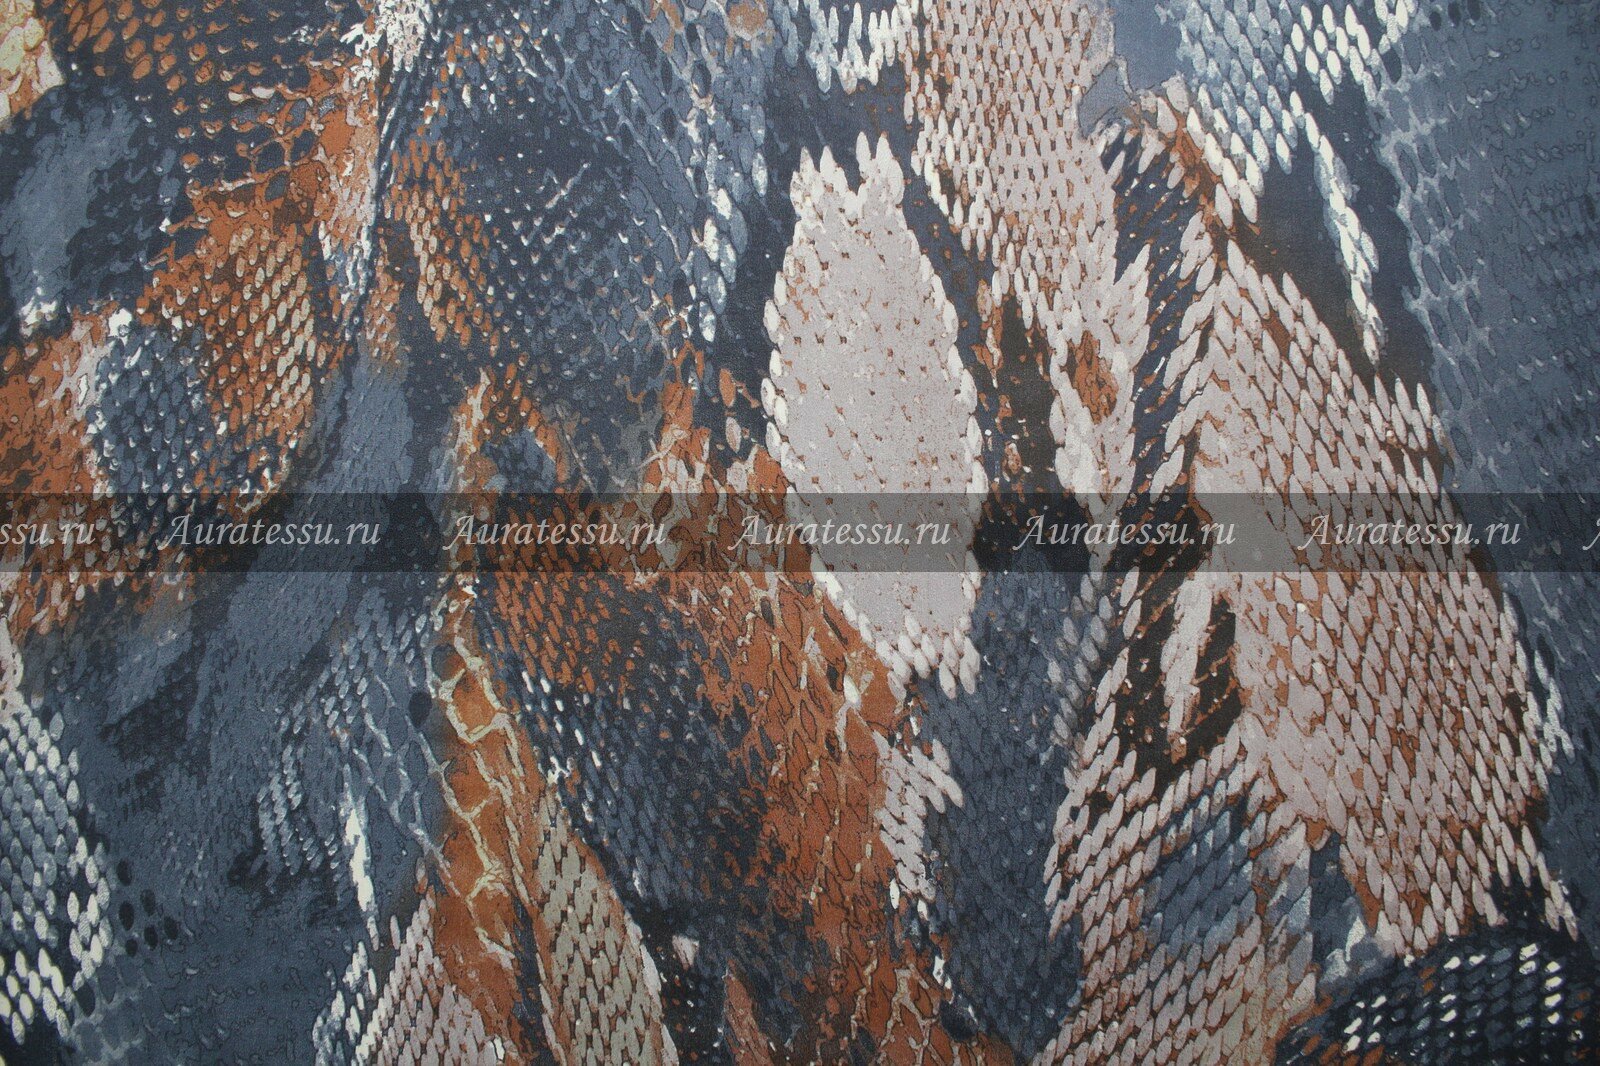 Ткань Шёлк-туаль R. Cavalli с узором под змею в серо-сине-коричневых тонах, ш138см, 0,5 м